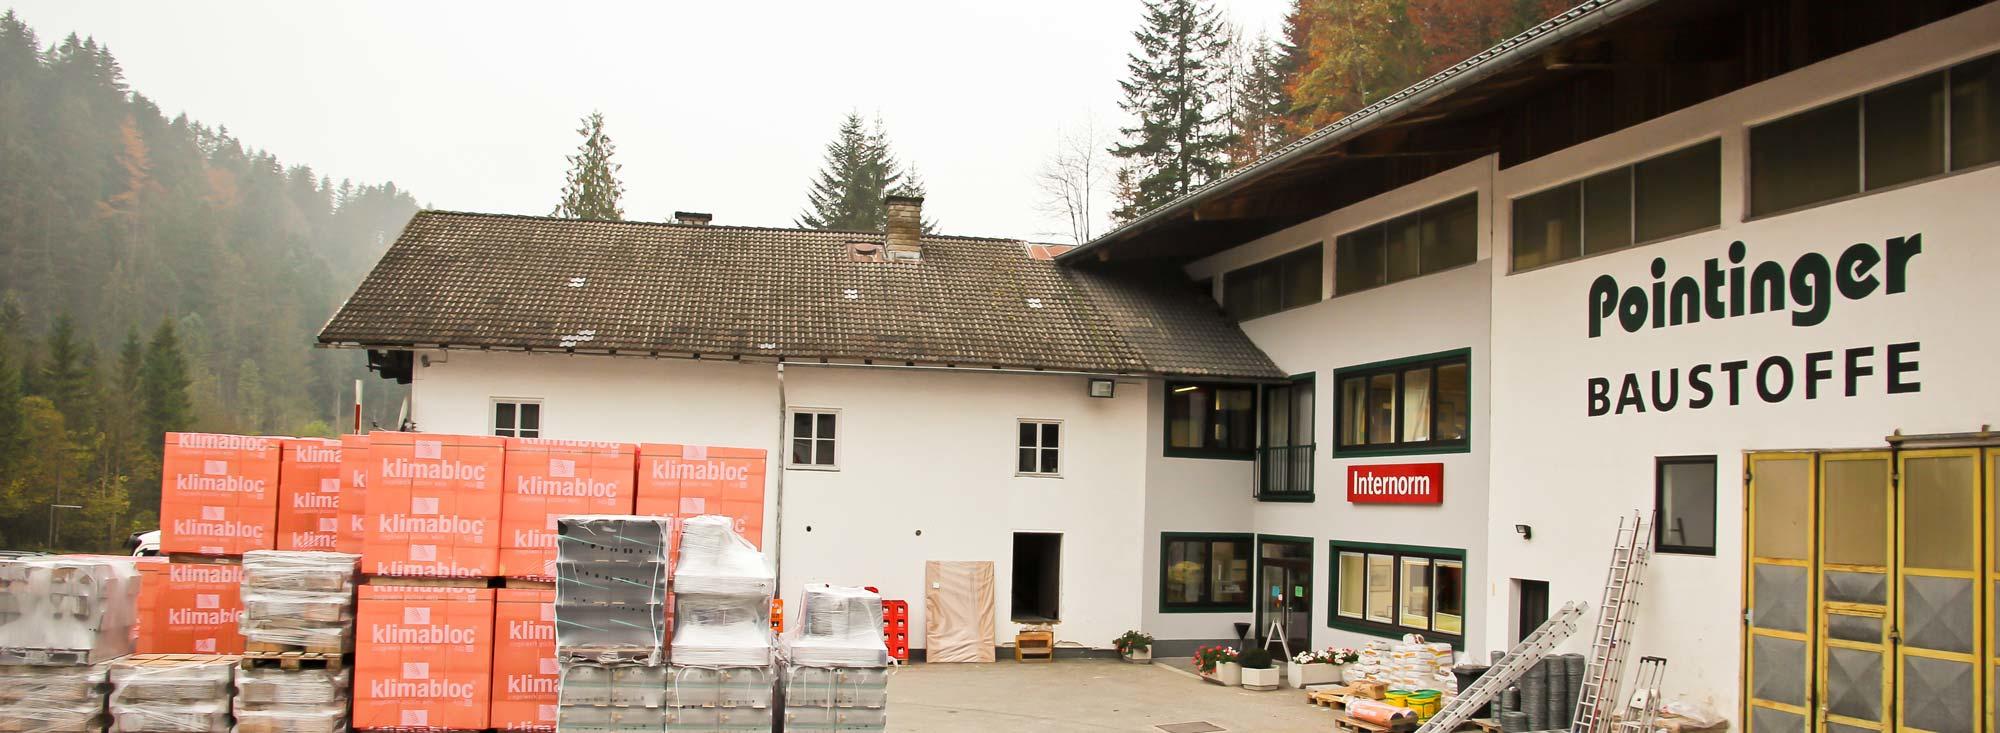 Bauzentrum Hannak GmbH Filiale Pointinger Baustoffe, Schorn 20 in Abtenau